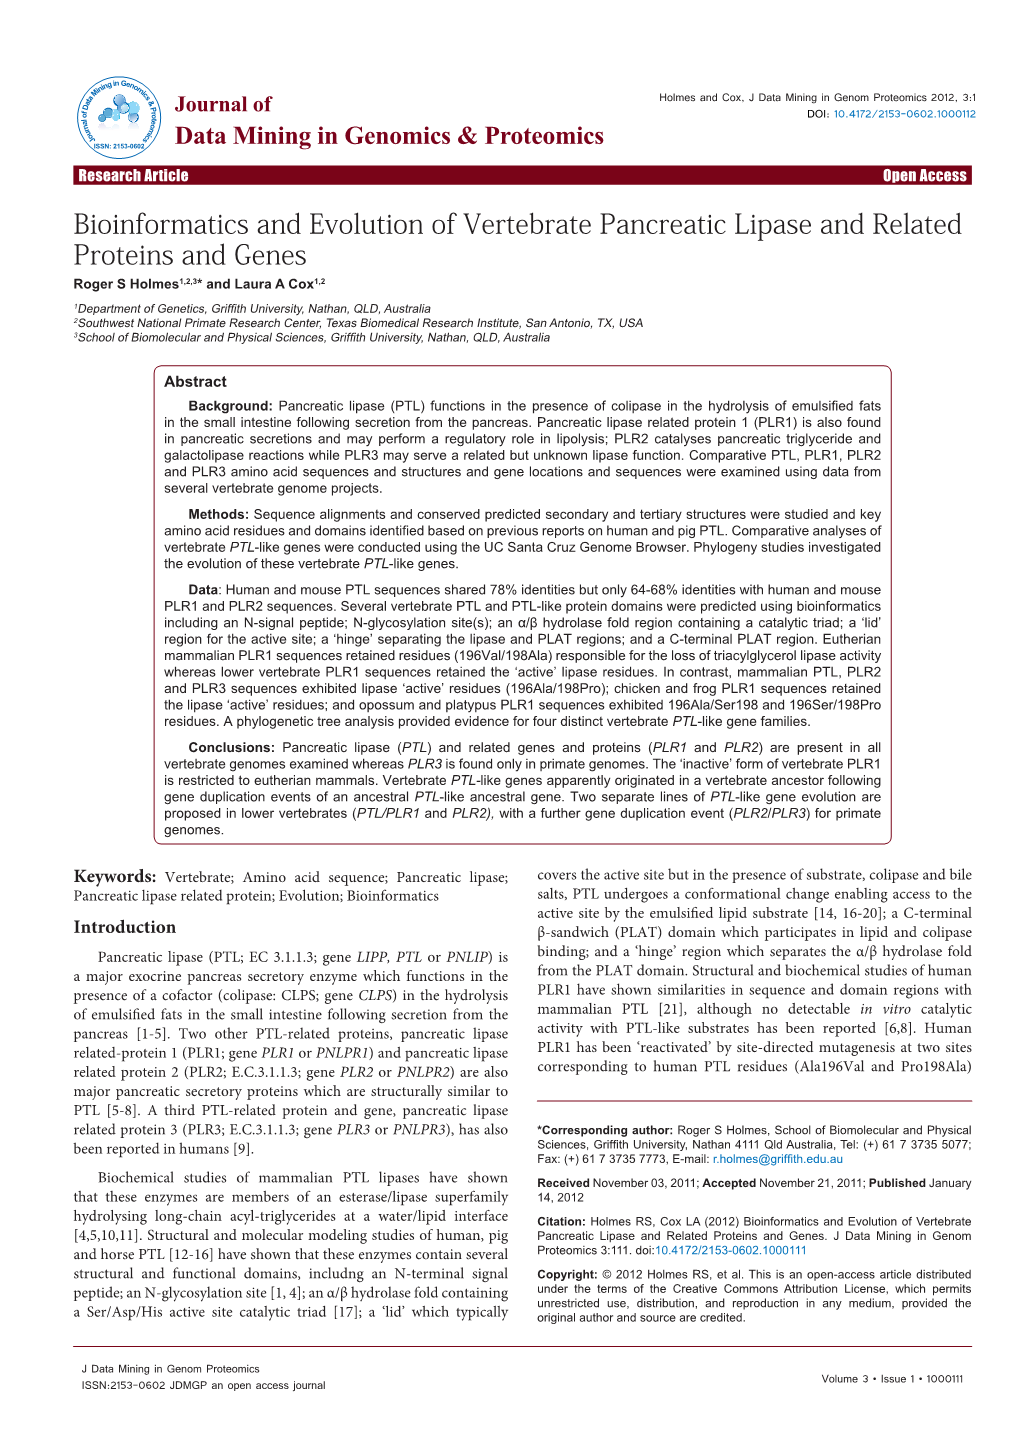 Bioinformatics and Evolution of Vertebrate Pancreatic Lipase And